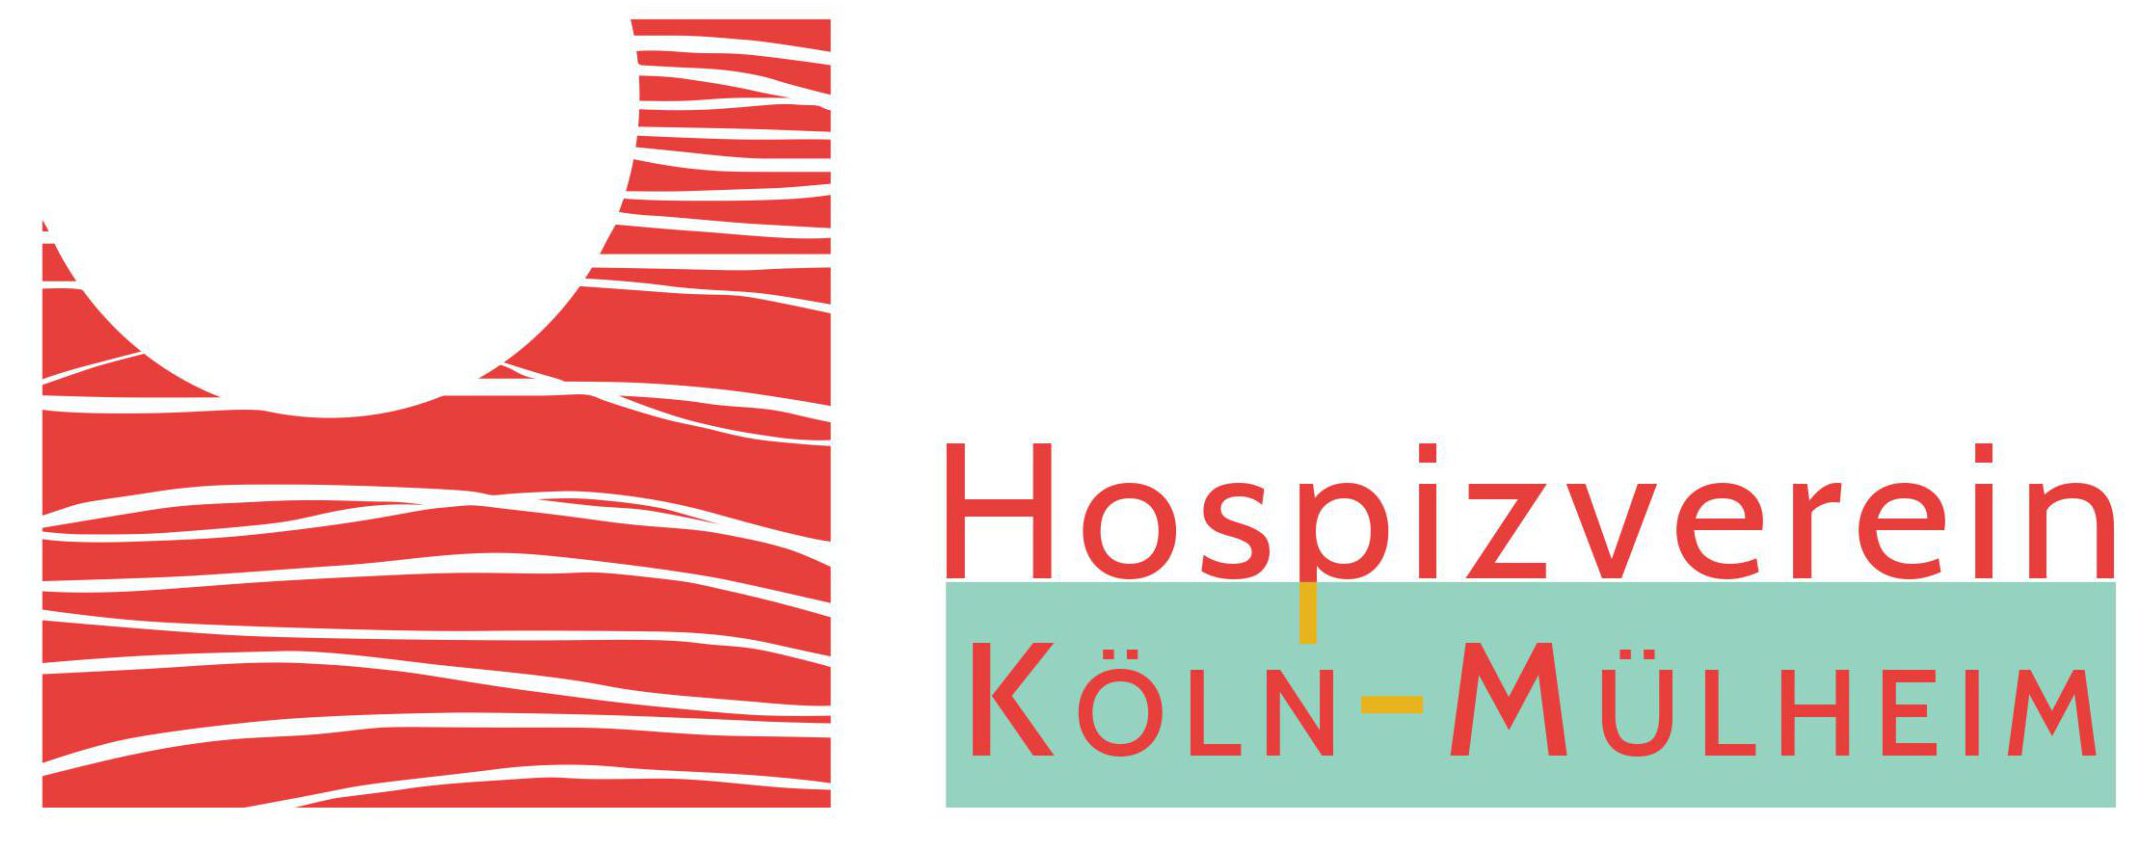 Logo Hopsizverein Köln-Mülheim